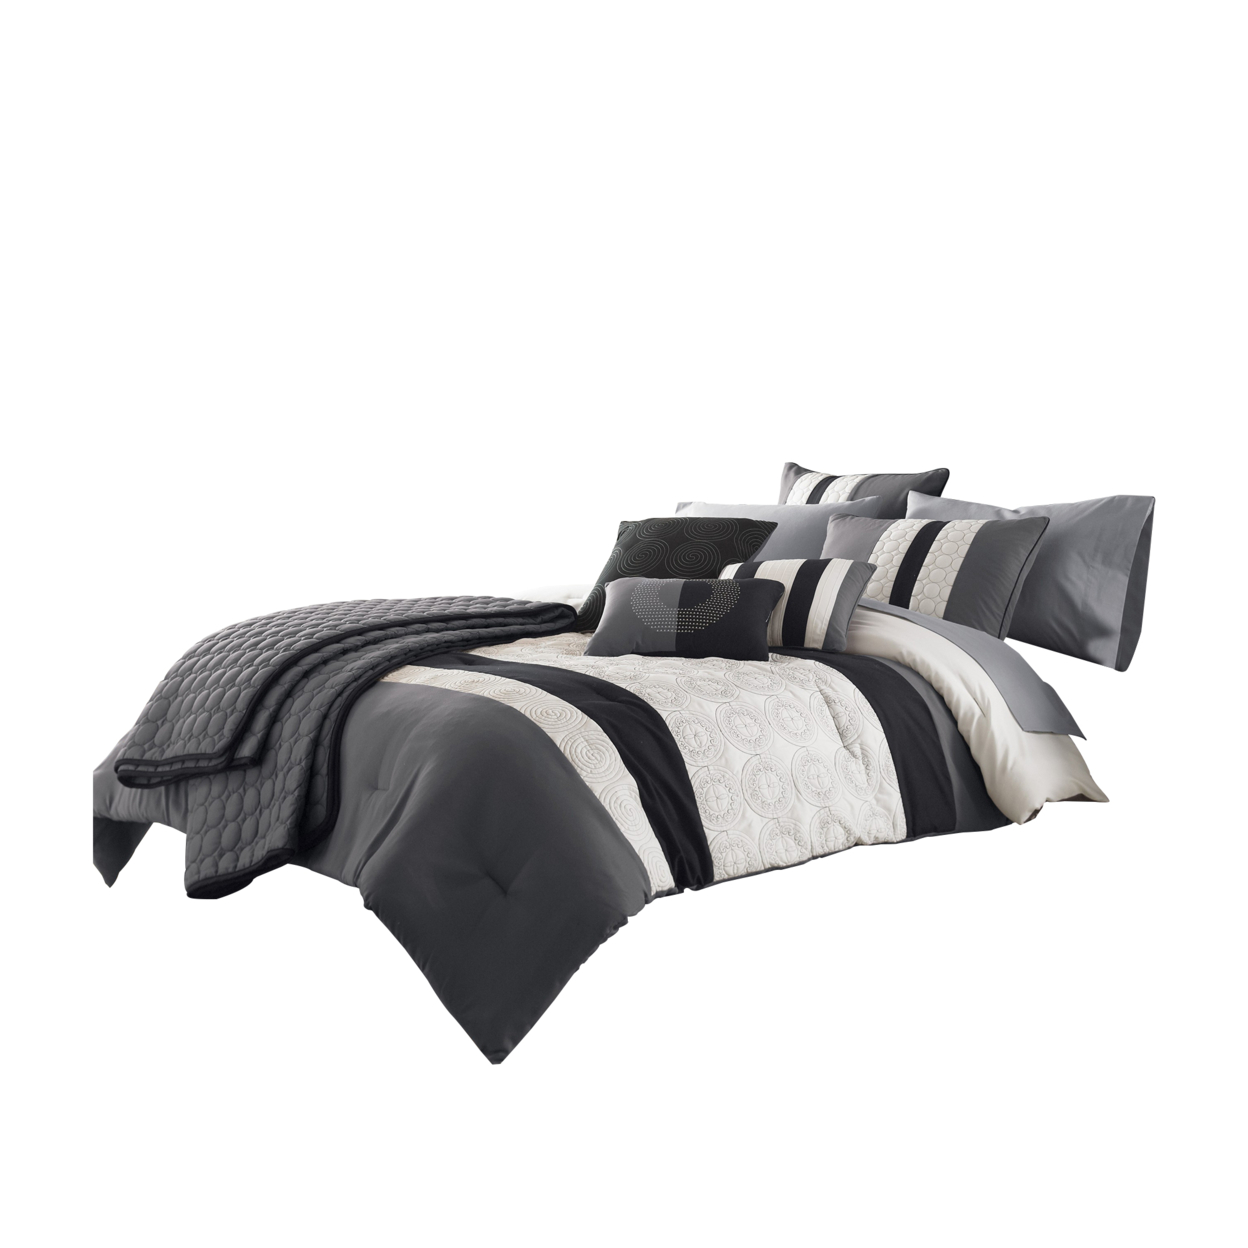 7 Piece King Size Cotton Comforter Set With Geometric Print, Gray And Black- Saltoro Sherpi